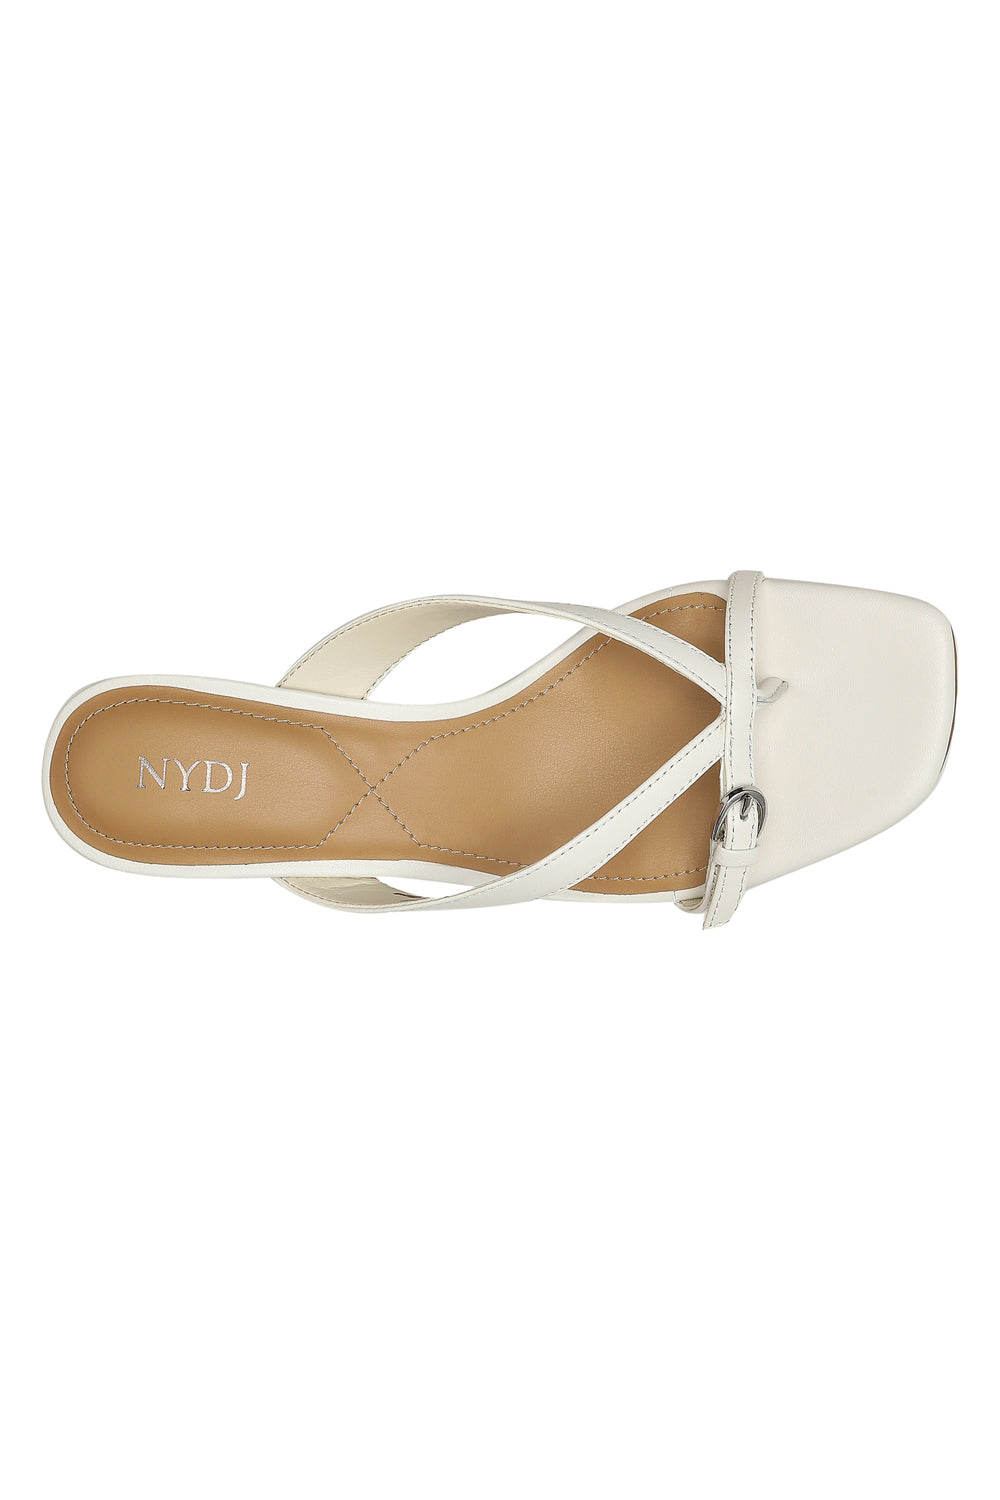 NYDJ Glam Block Heel Sandals In Nappa Leather - White